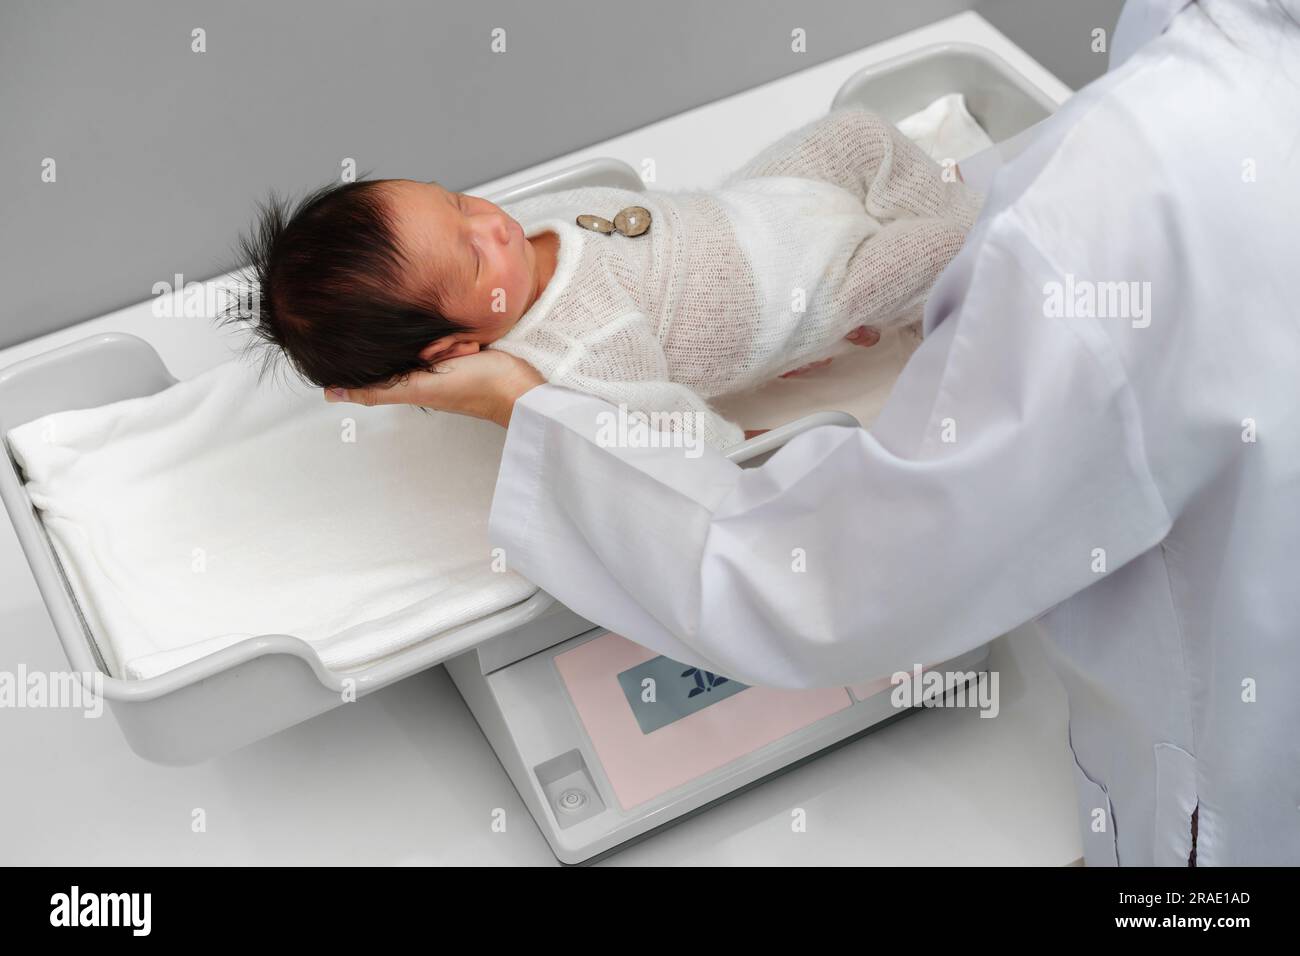 Baby boy birth weight on hospital scales Stock Photo - Alamy